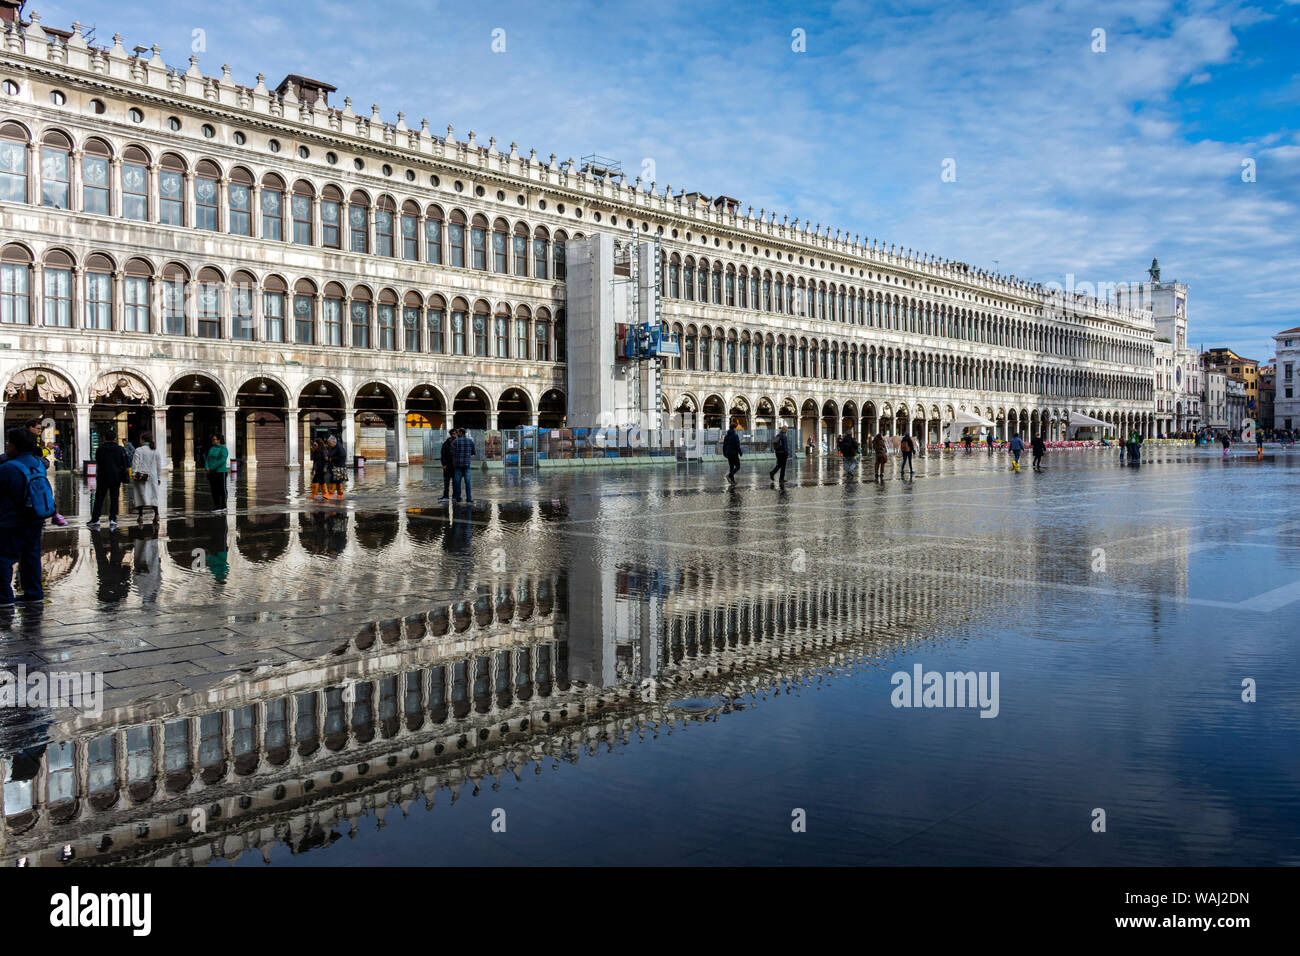 The Procuratie Vecchie building during an Acqua alta (high water) event, Saint Mark's Square, Venice, Italy Stock Photo